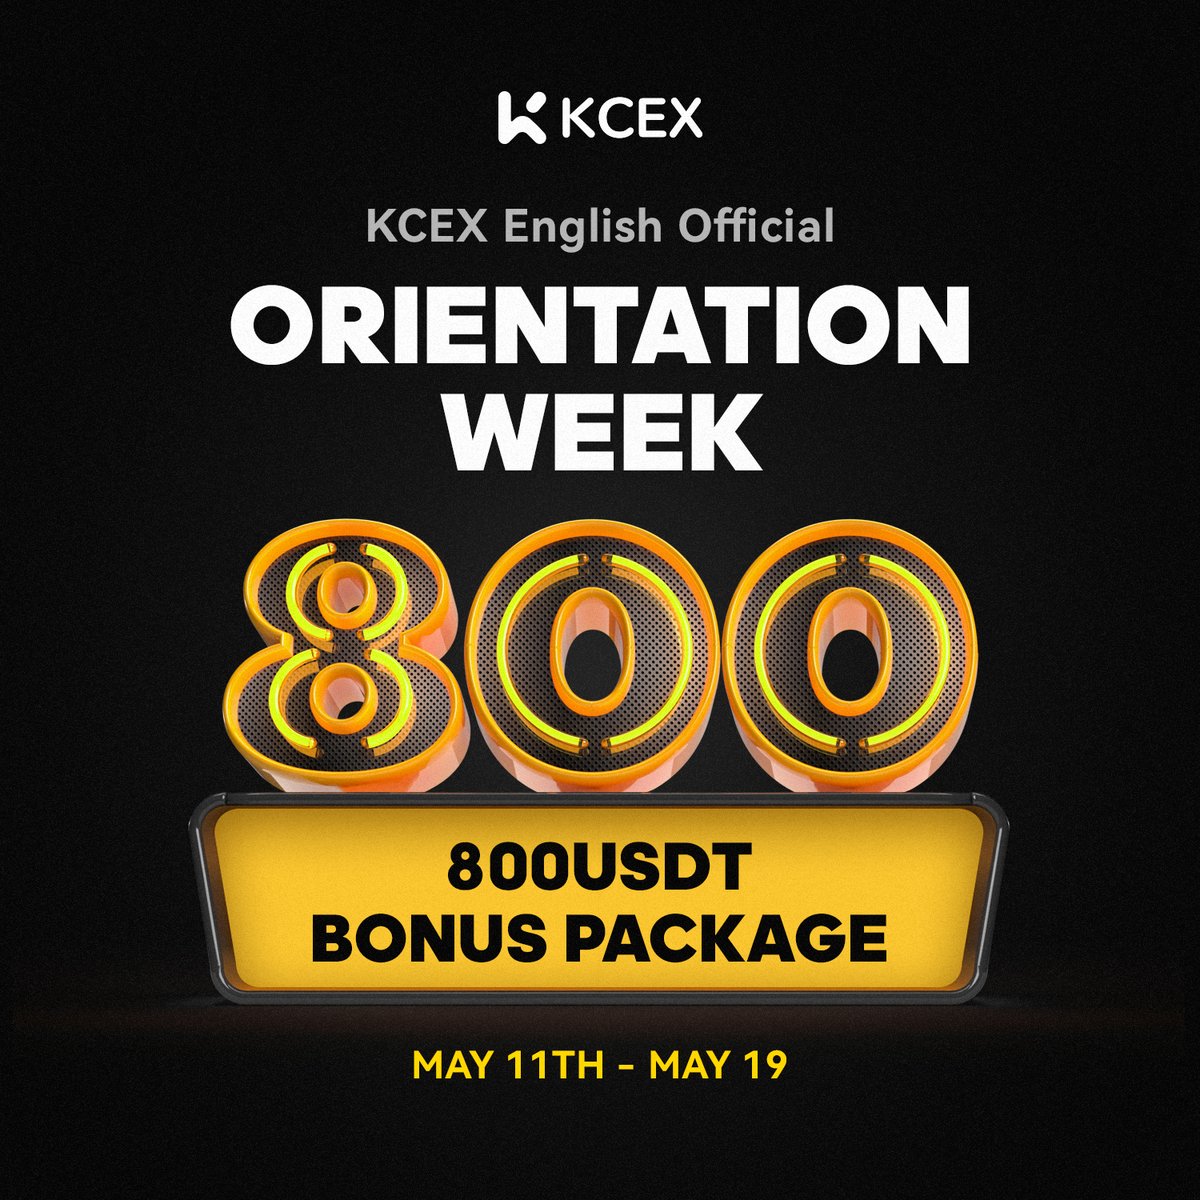 KCEX Orientation Week - Win 800USDT bonus package 🥰Bringing in the new chapter of KCEX English Official ⏰May 11 - May 19 🔥 Participate via: rewards.taskon.xyz/campaign/detai… 🌵10 Lucky winners split the 500USDT bonus, plus 300U bonus as surprises! #KCEX #TaskOn #Giveaways